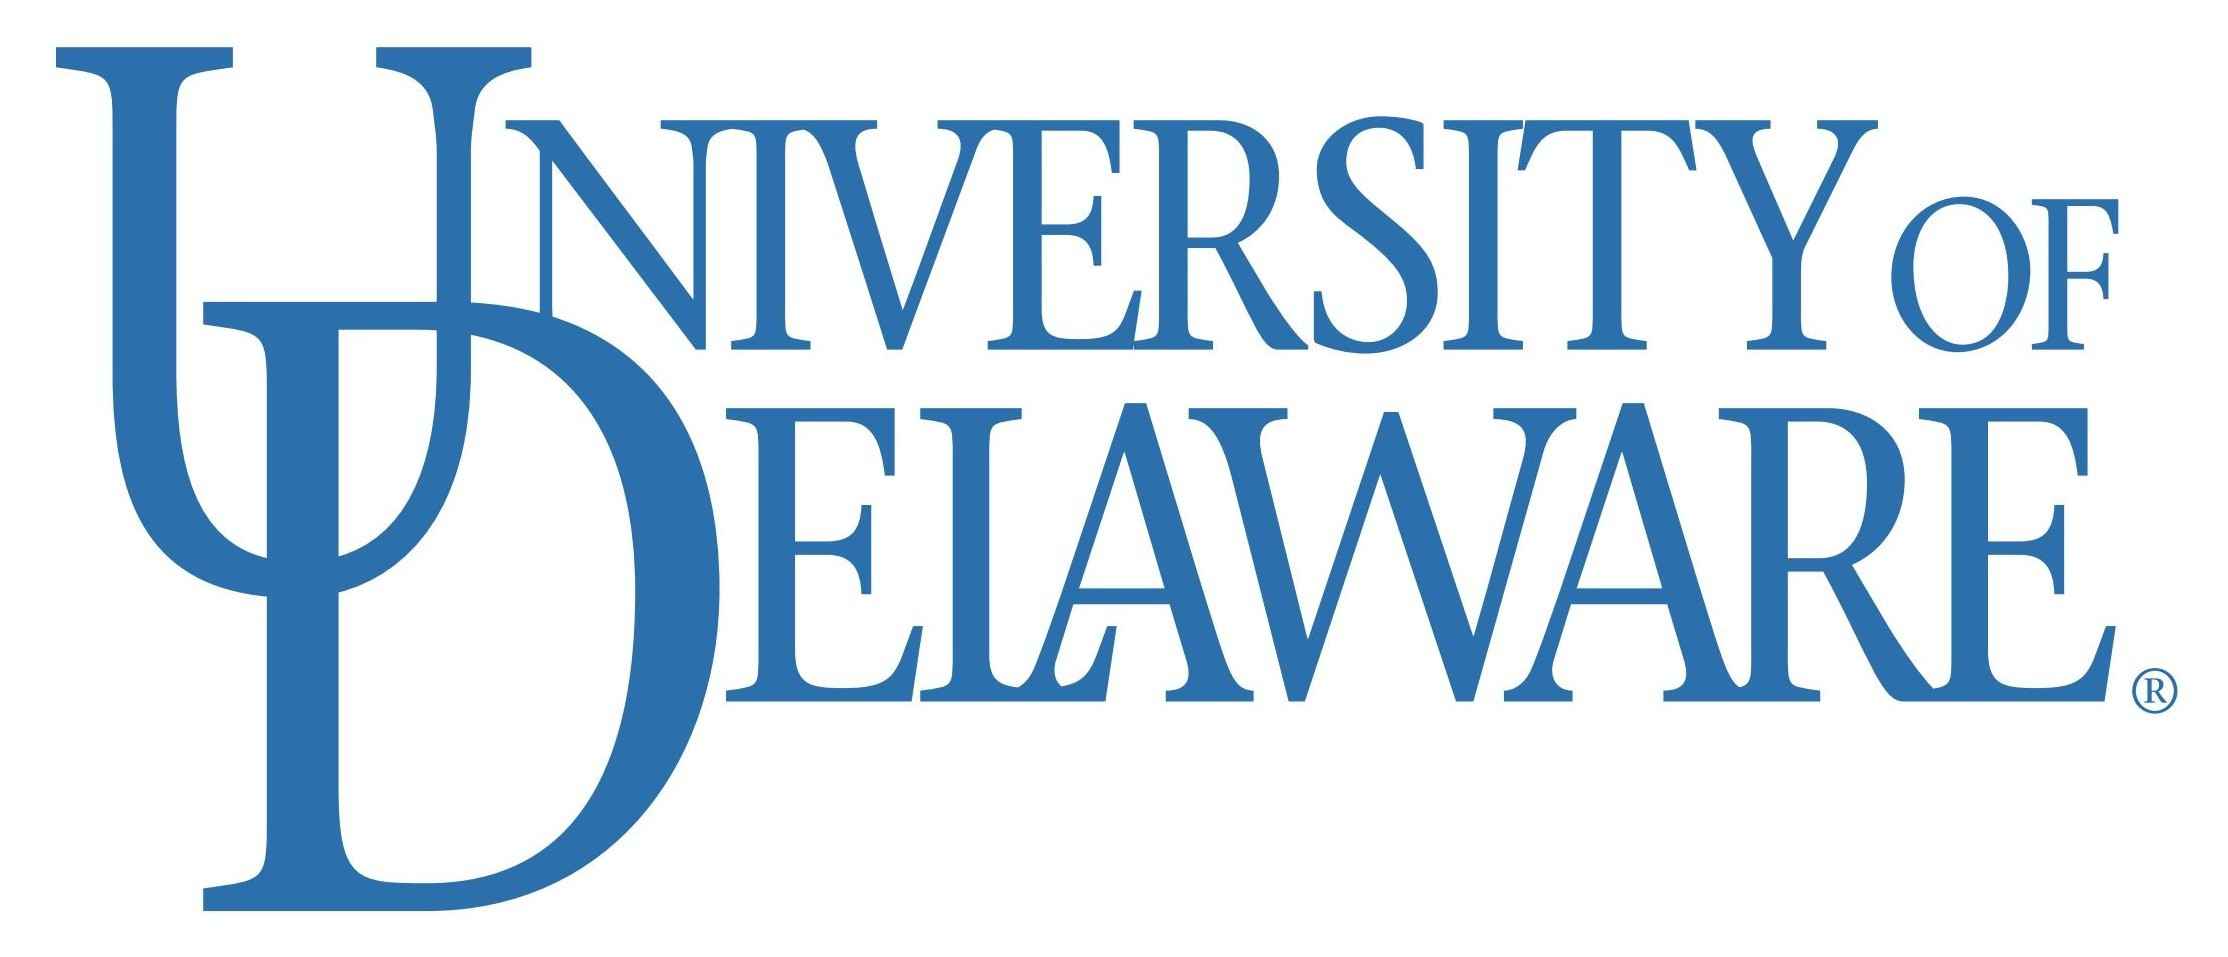 UD - University of Delaware Logo